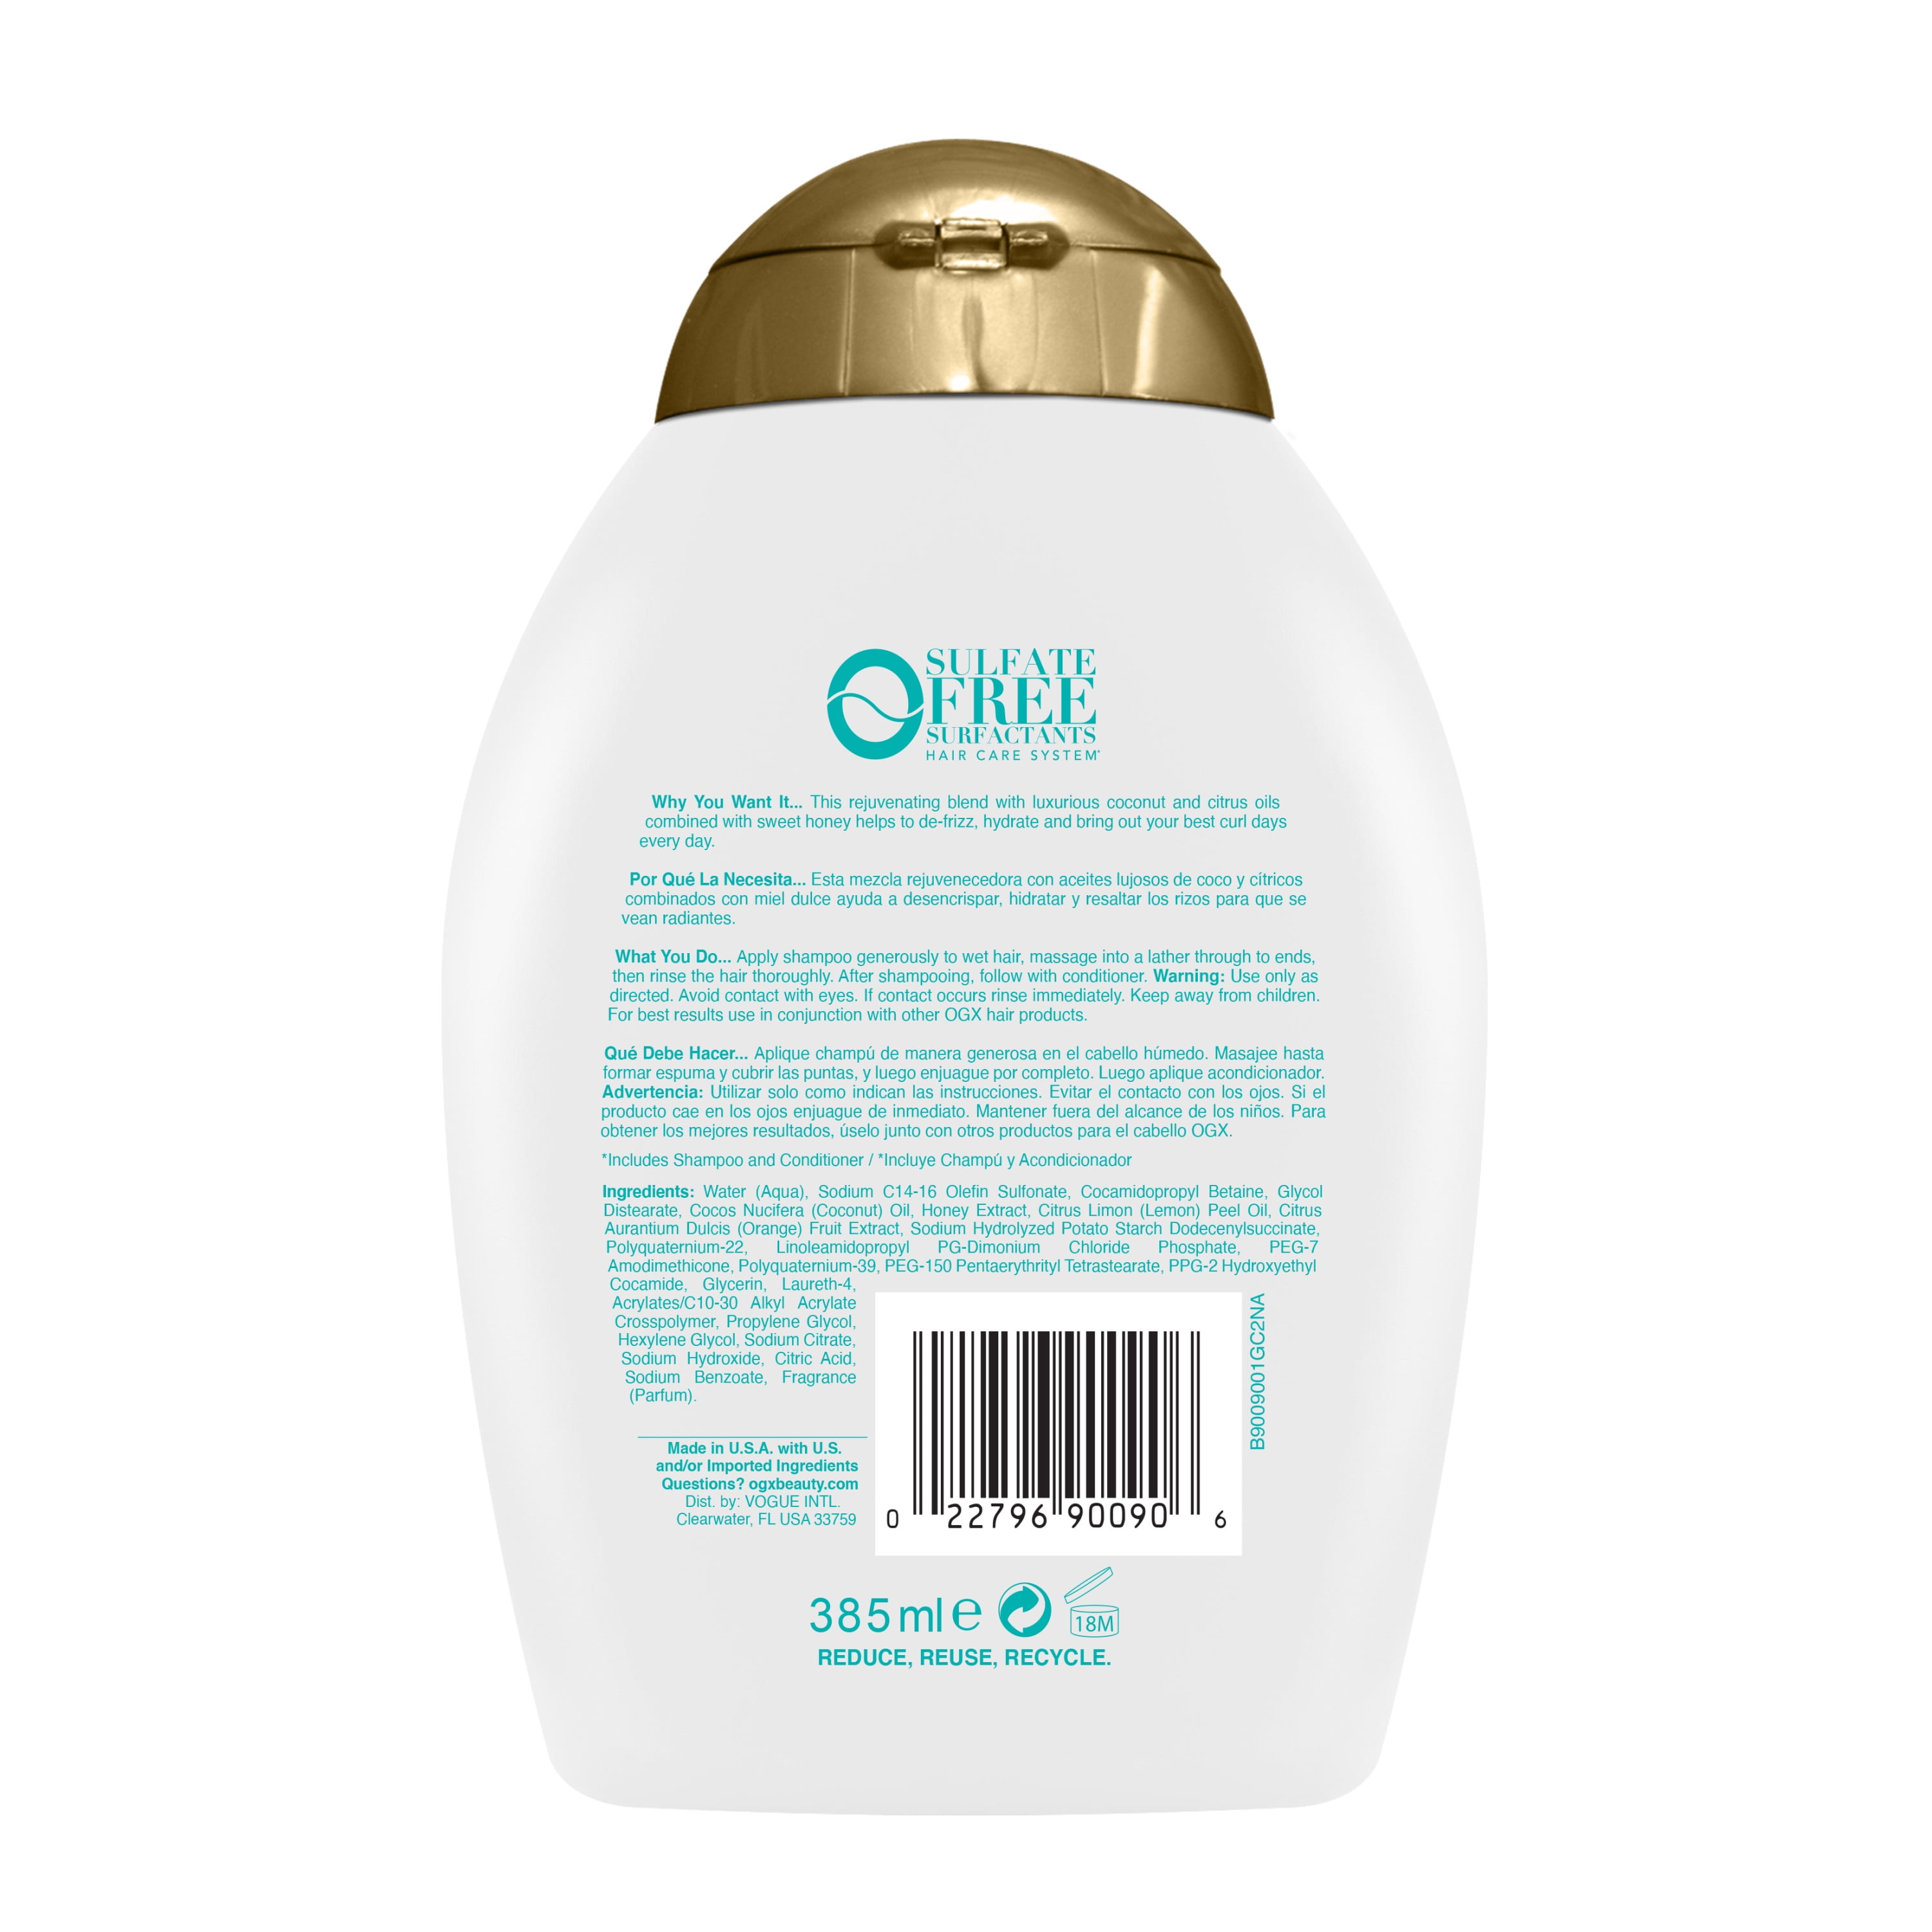 OGX Quenching + Coconut Curls Daily Shampoo with 13 oz - Walmart.com